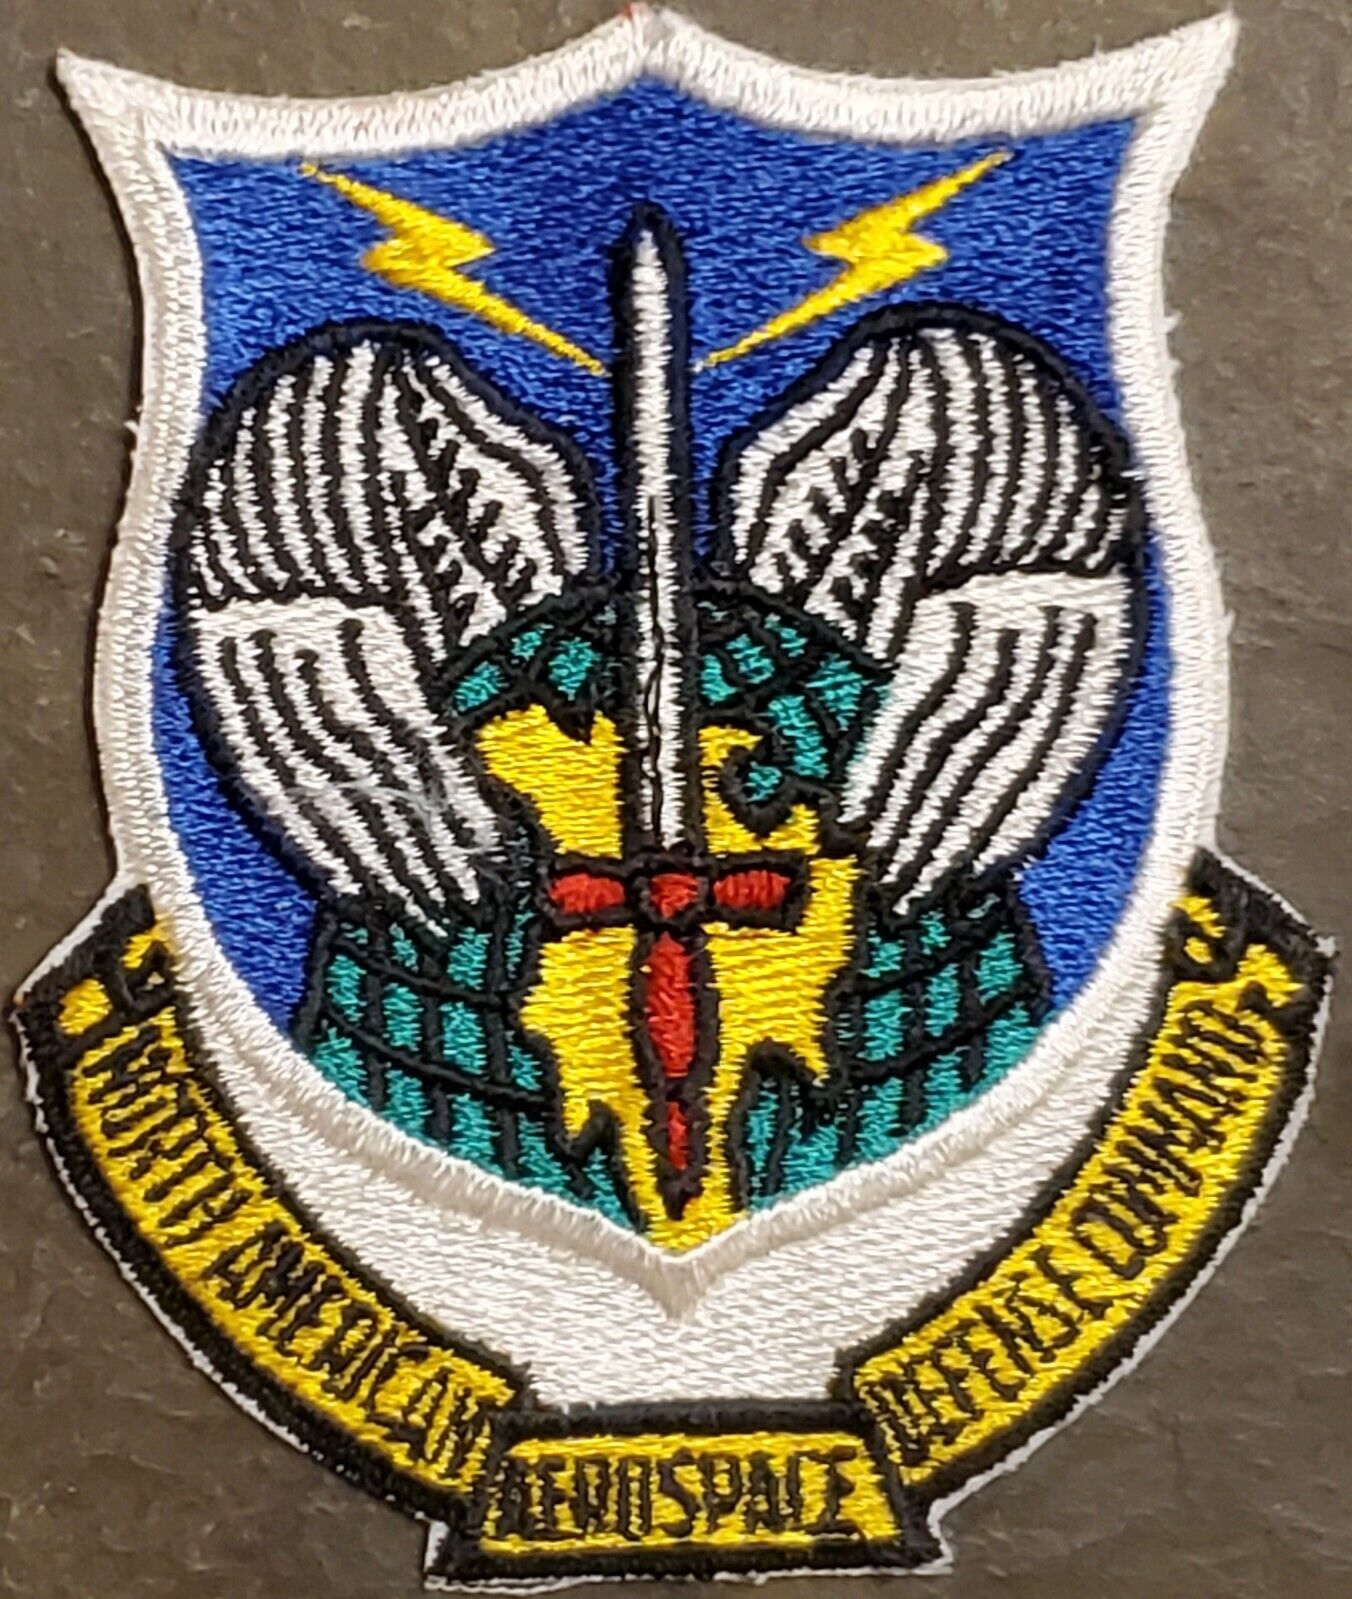 VINTAGE USAF NORTH AMERICAN AEROSPACE DEFENSE COMMAND SQUADRON PATCH ORIGINAL 